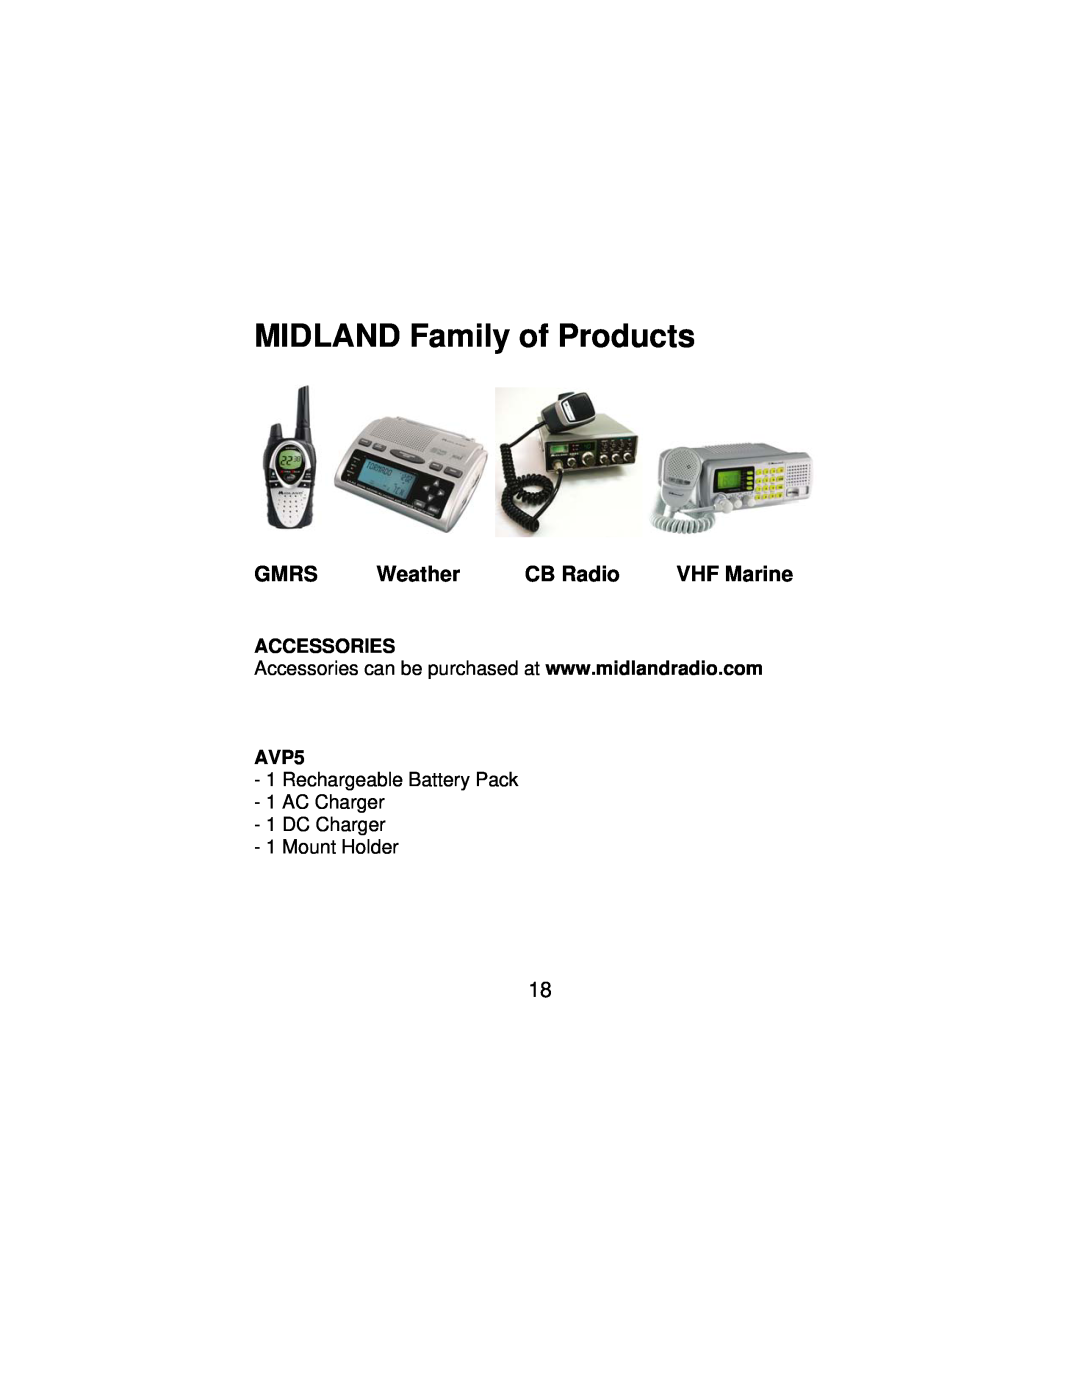 Midland Radio 1 manual Accessories, AVP5, MIDLAND Family of Products, Gmrs, Weather, CB Radio, VHF Marine 